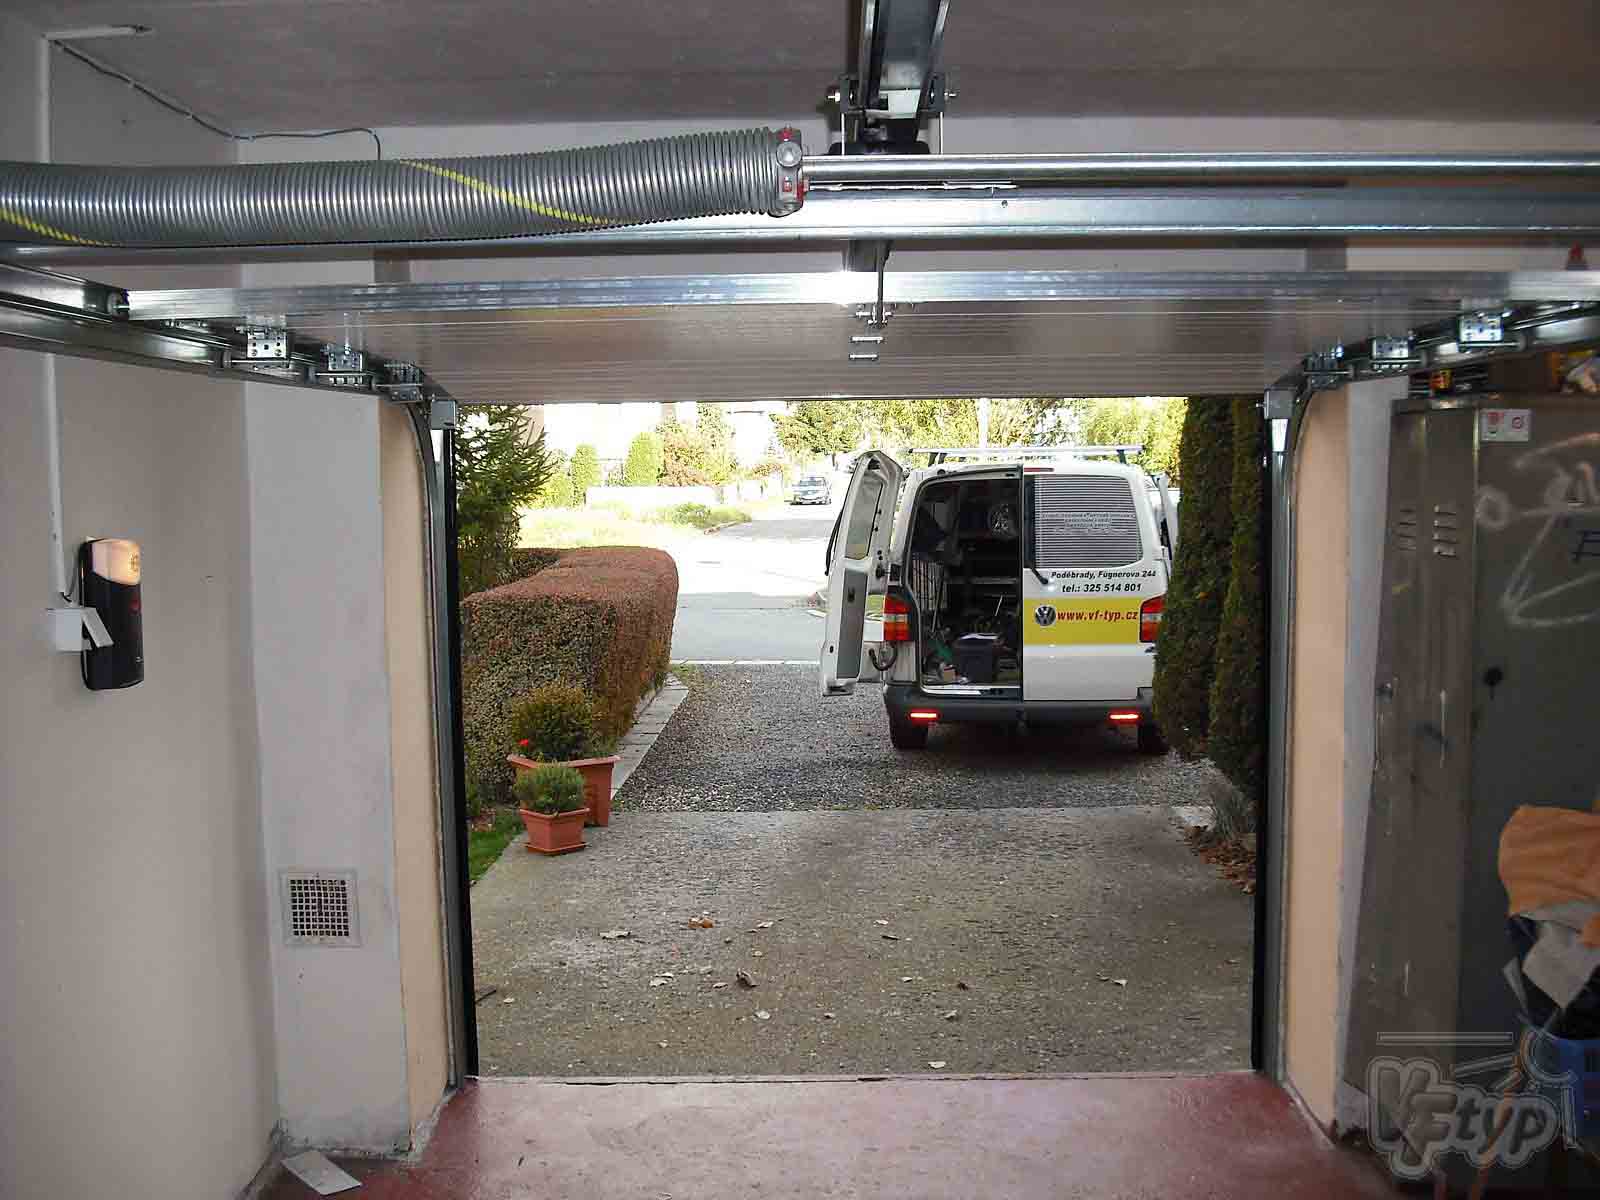 Sekční garážová vrata TRIDO Evo - VFtyp